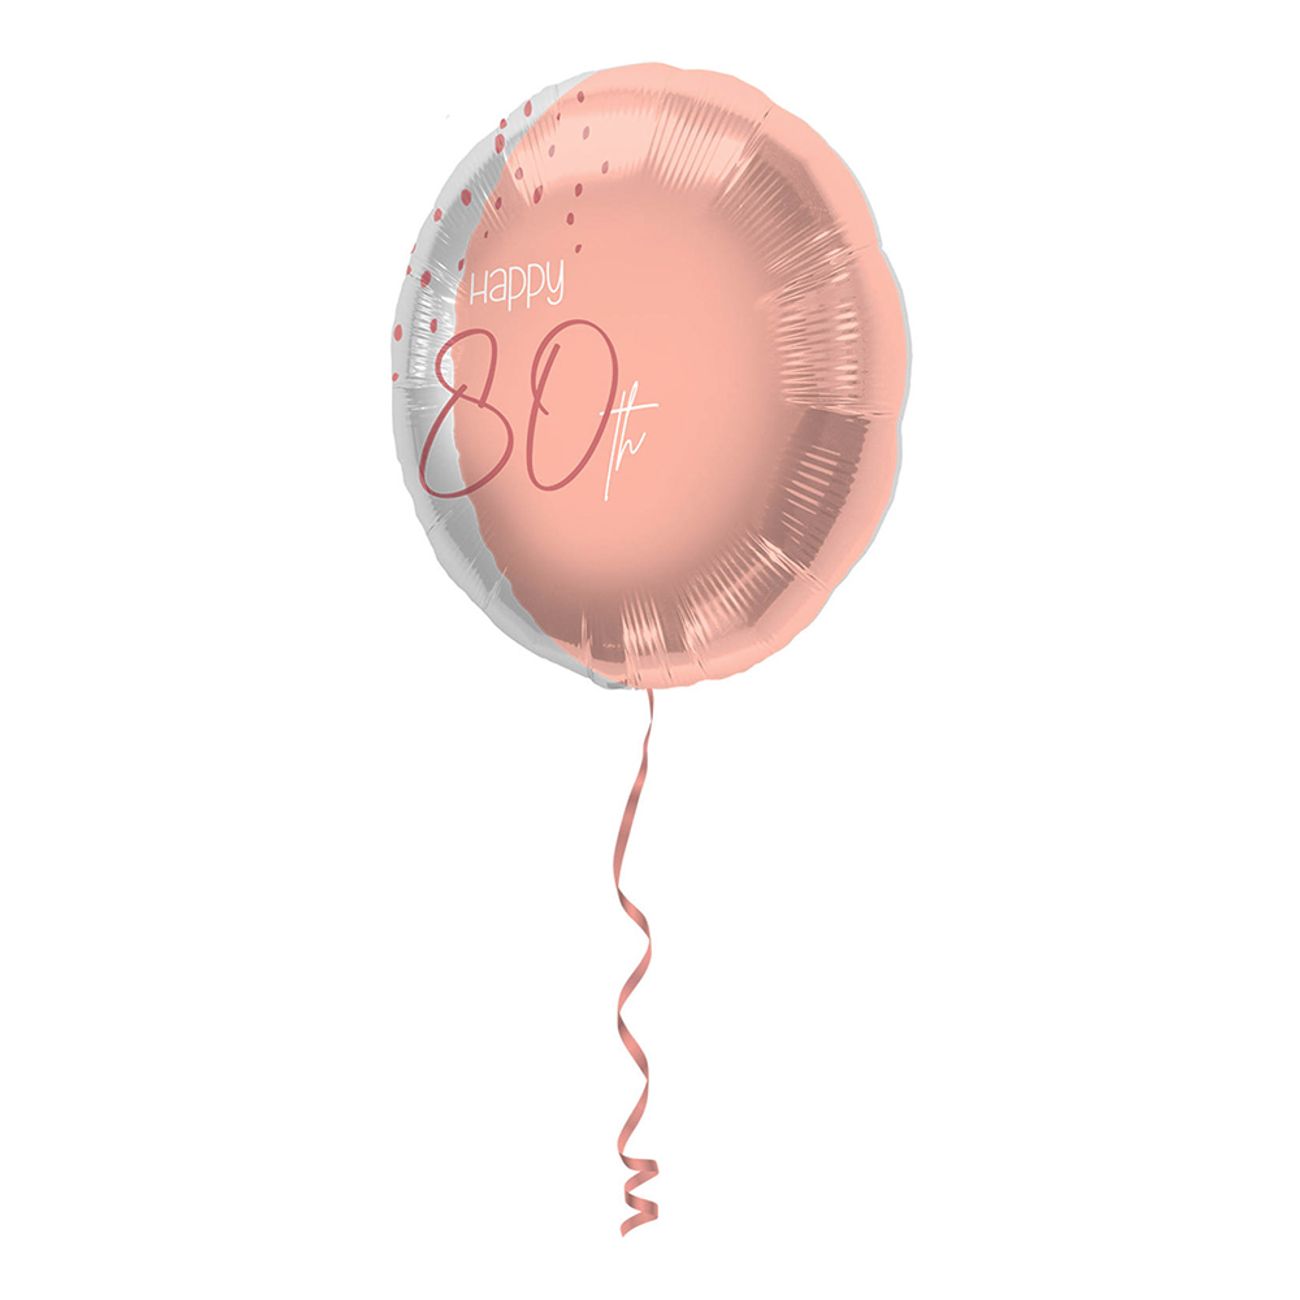 folieballong-happy-80th-lush-blush-1